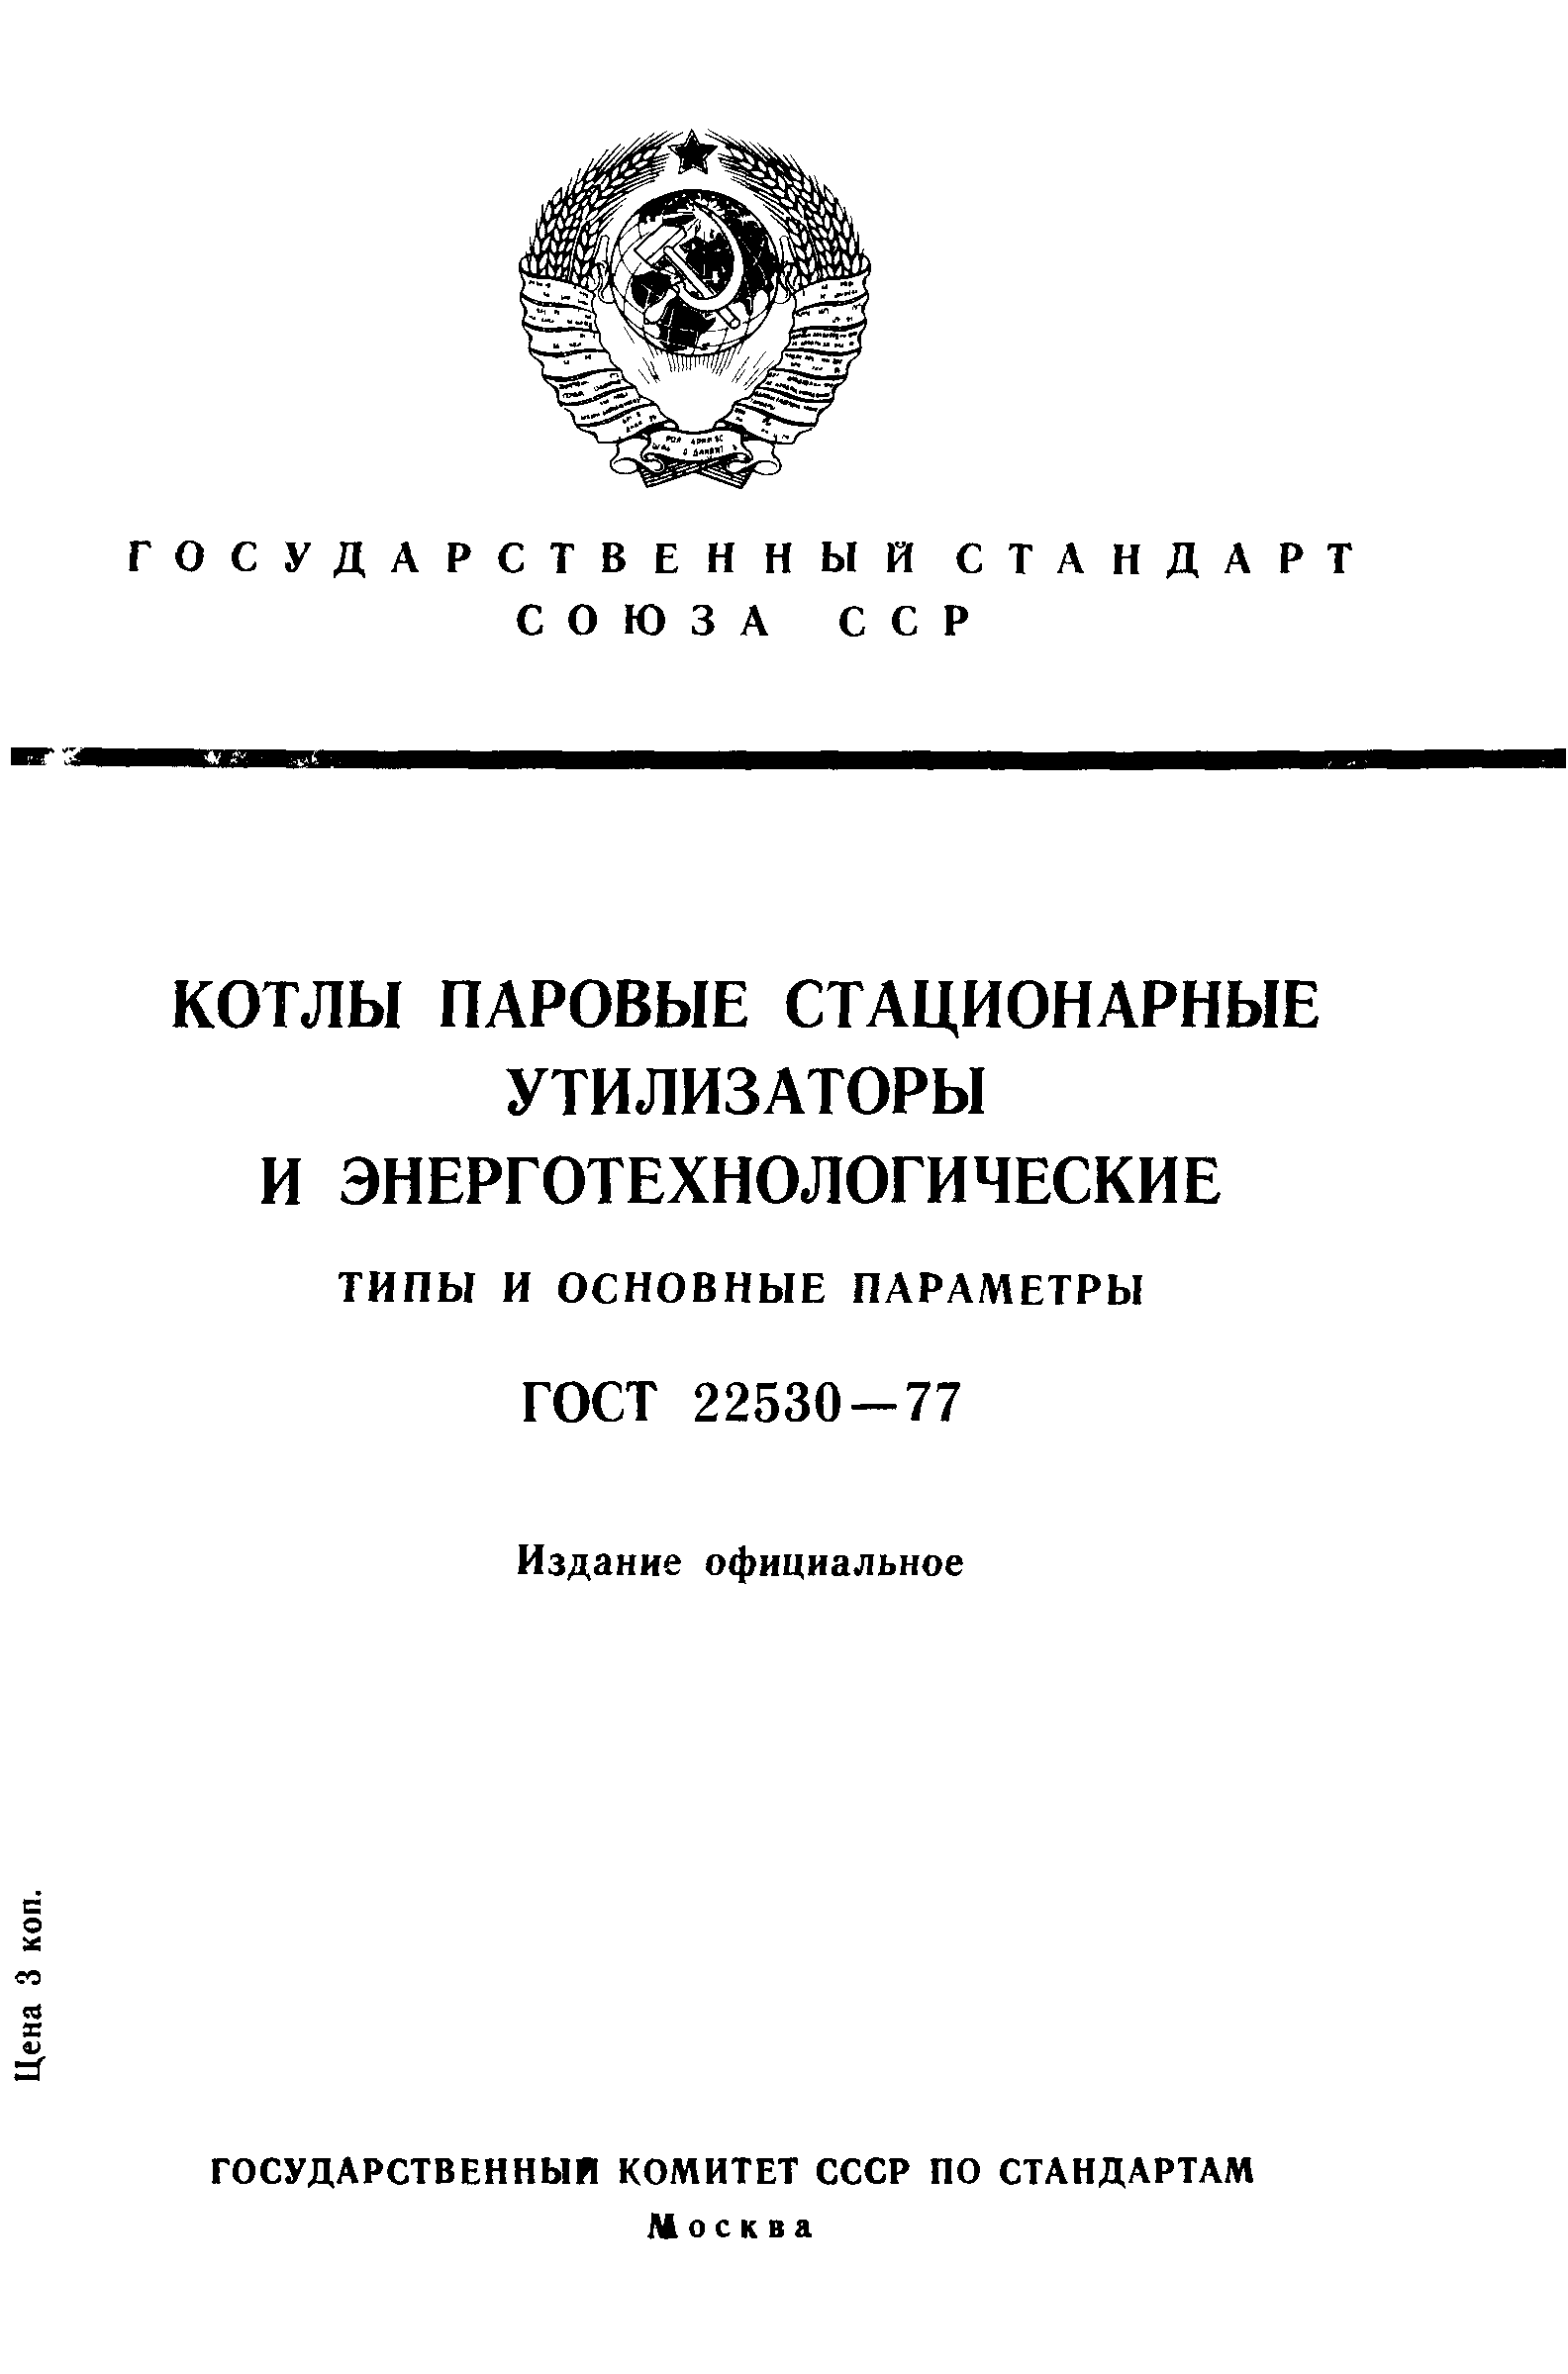 ГОСТ 22530-77